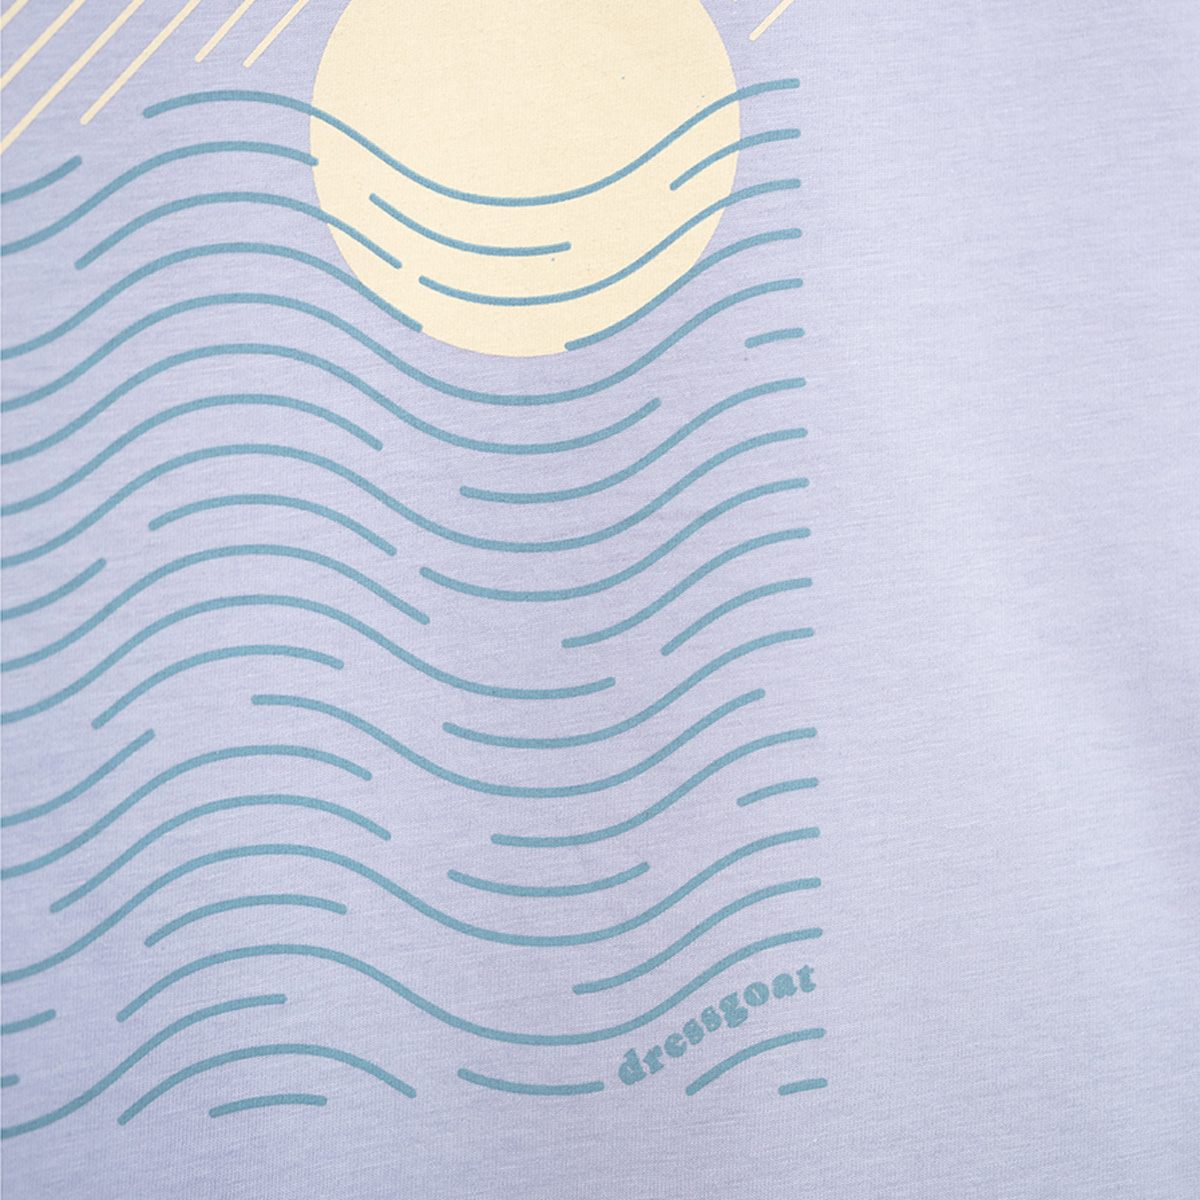 Detailansicht blaues T-Shirt Wellen Sonne Print